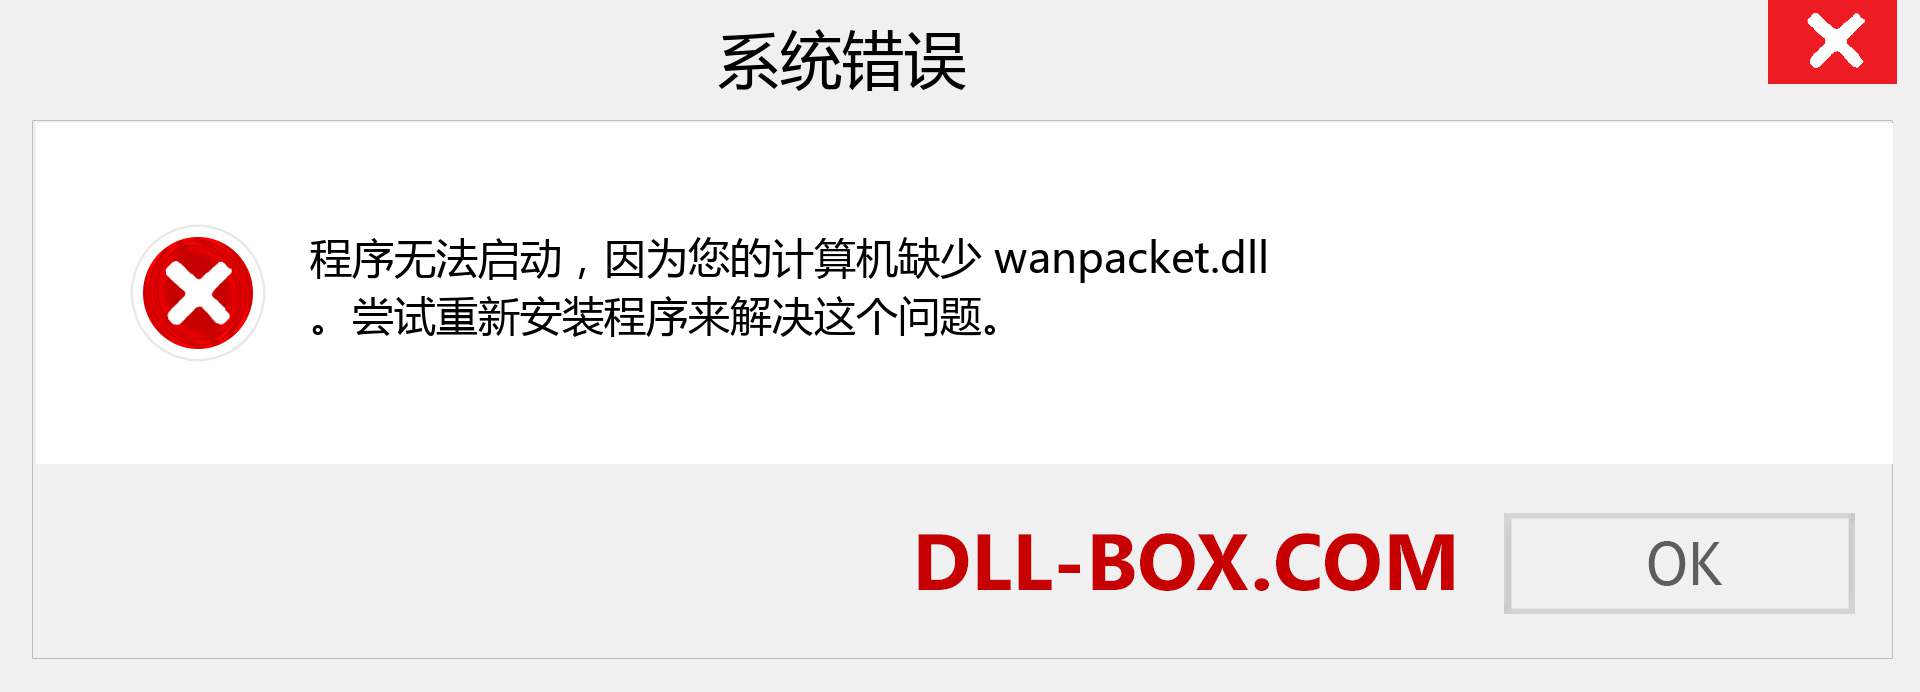 wanpacket.dll 文件丢失？。 适用于 Windows 7、8、10 的下载 - 修复 Windows、照片、图像上的 wanpacket dll 丢失错误